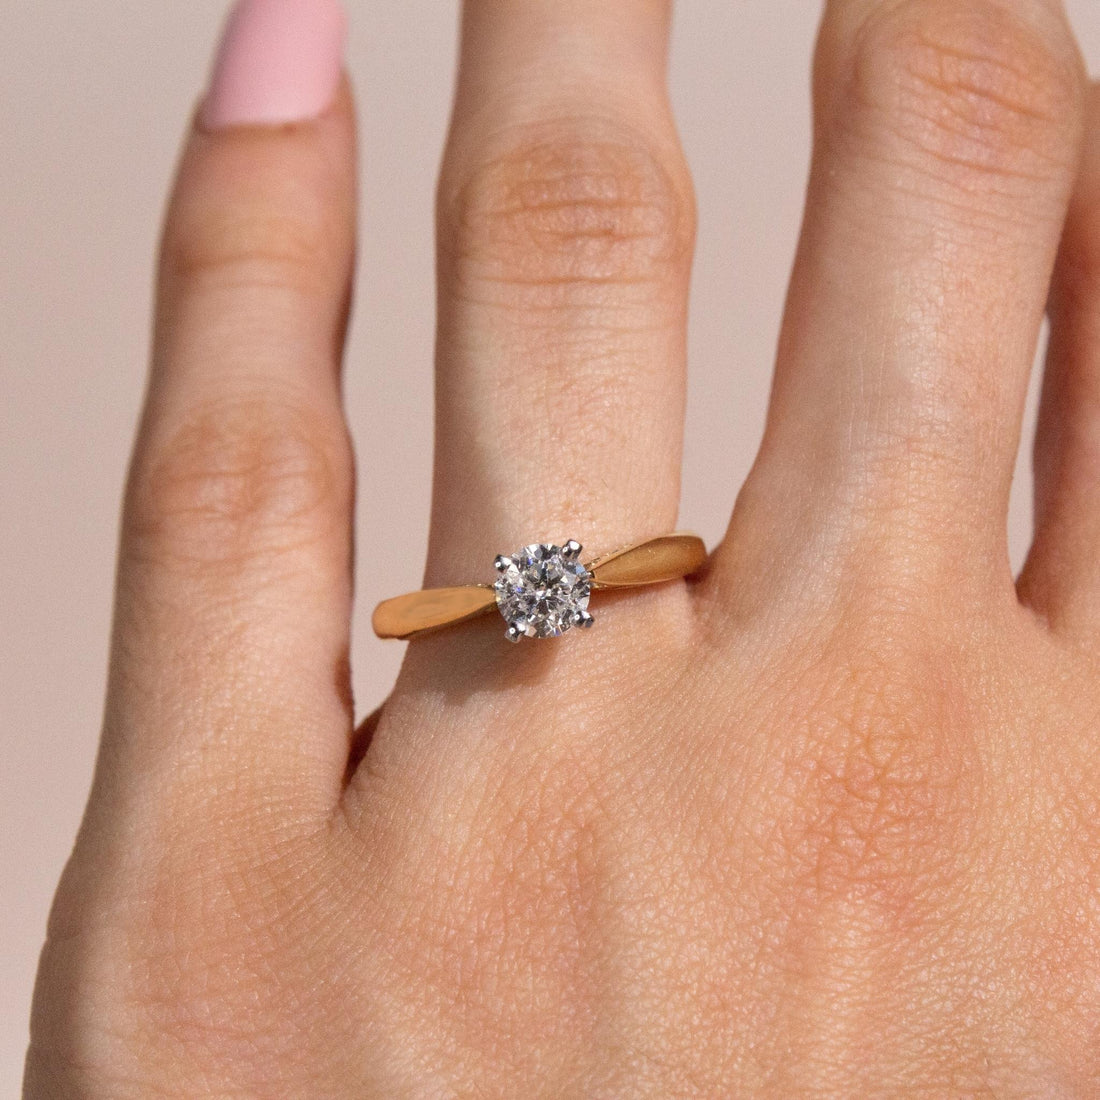 0.60 carat diamond ring on finger, solitaire diamond engagement ring